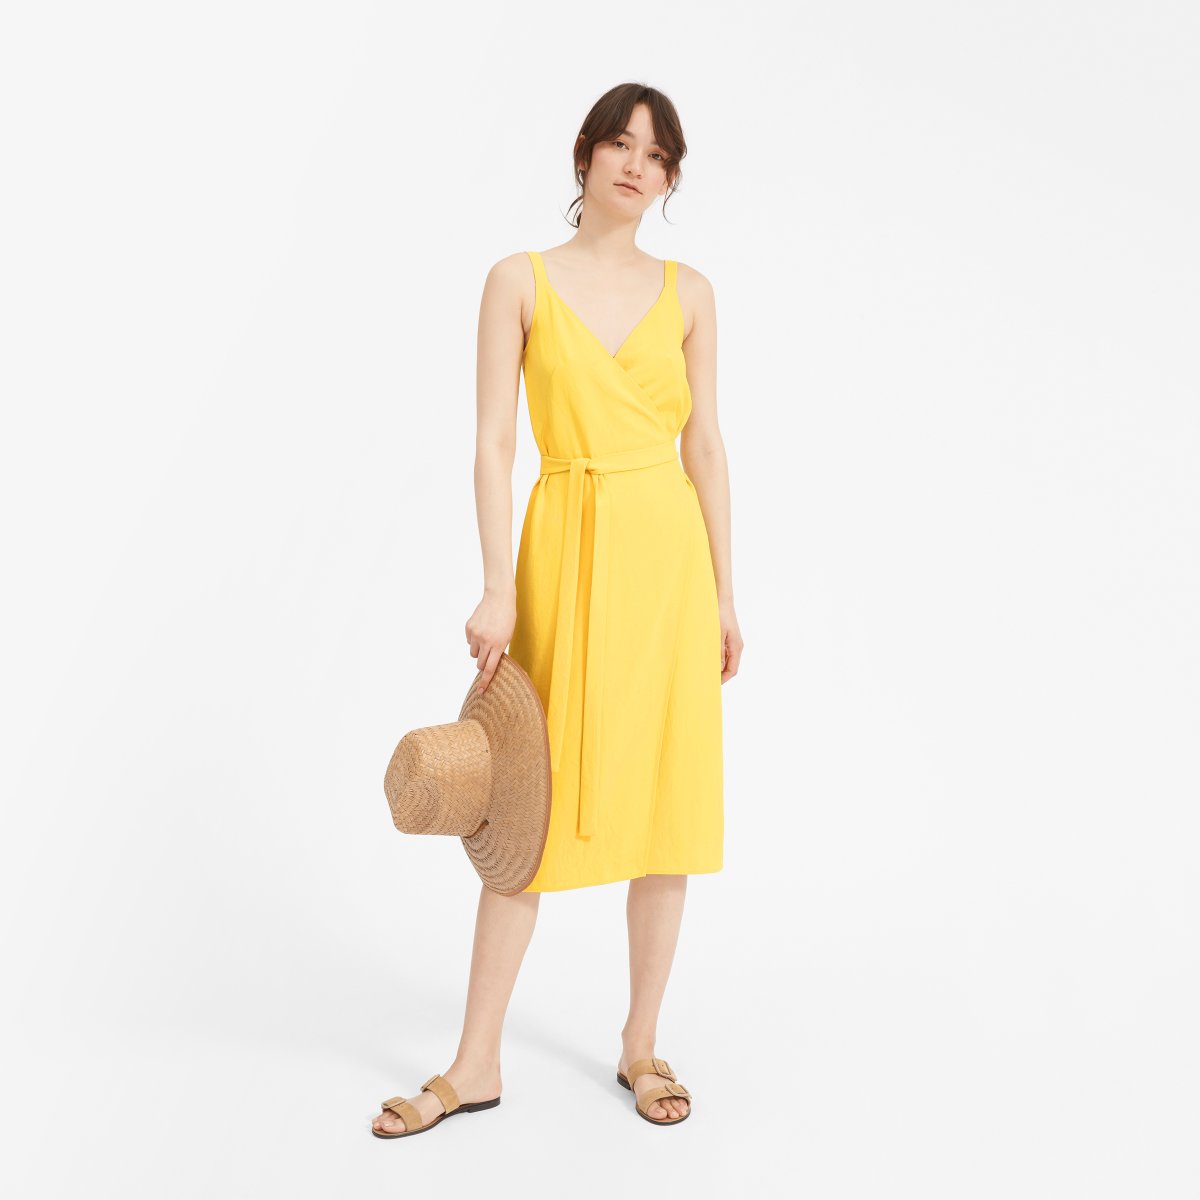 Everlane Choose What You Pay / Yellow Wrap Dress - Sunshine Style, A Florida Based Fashion Blog